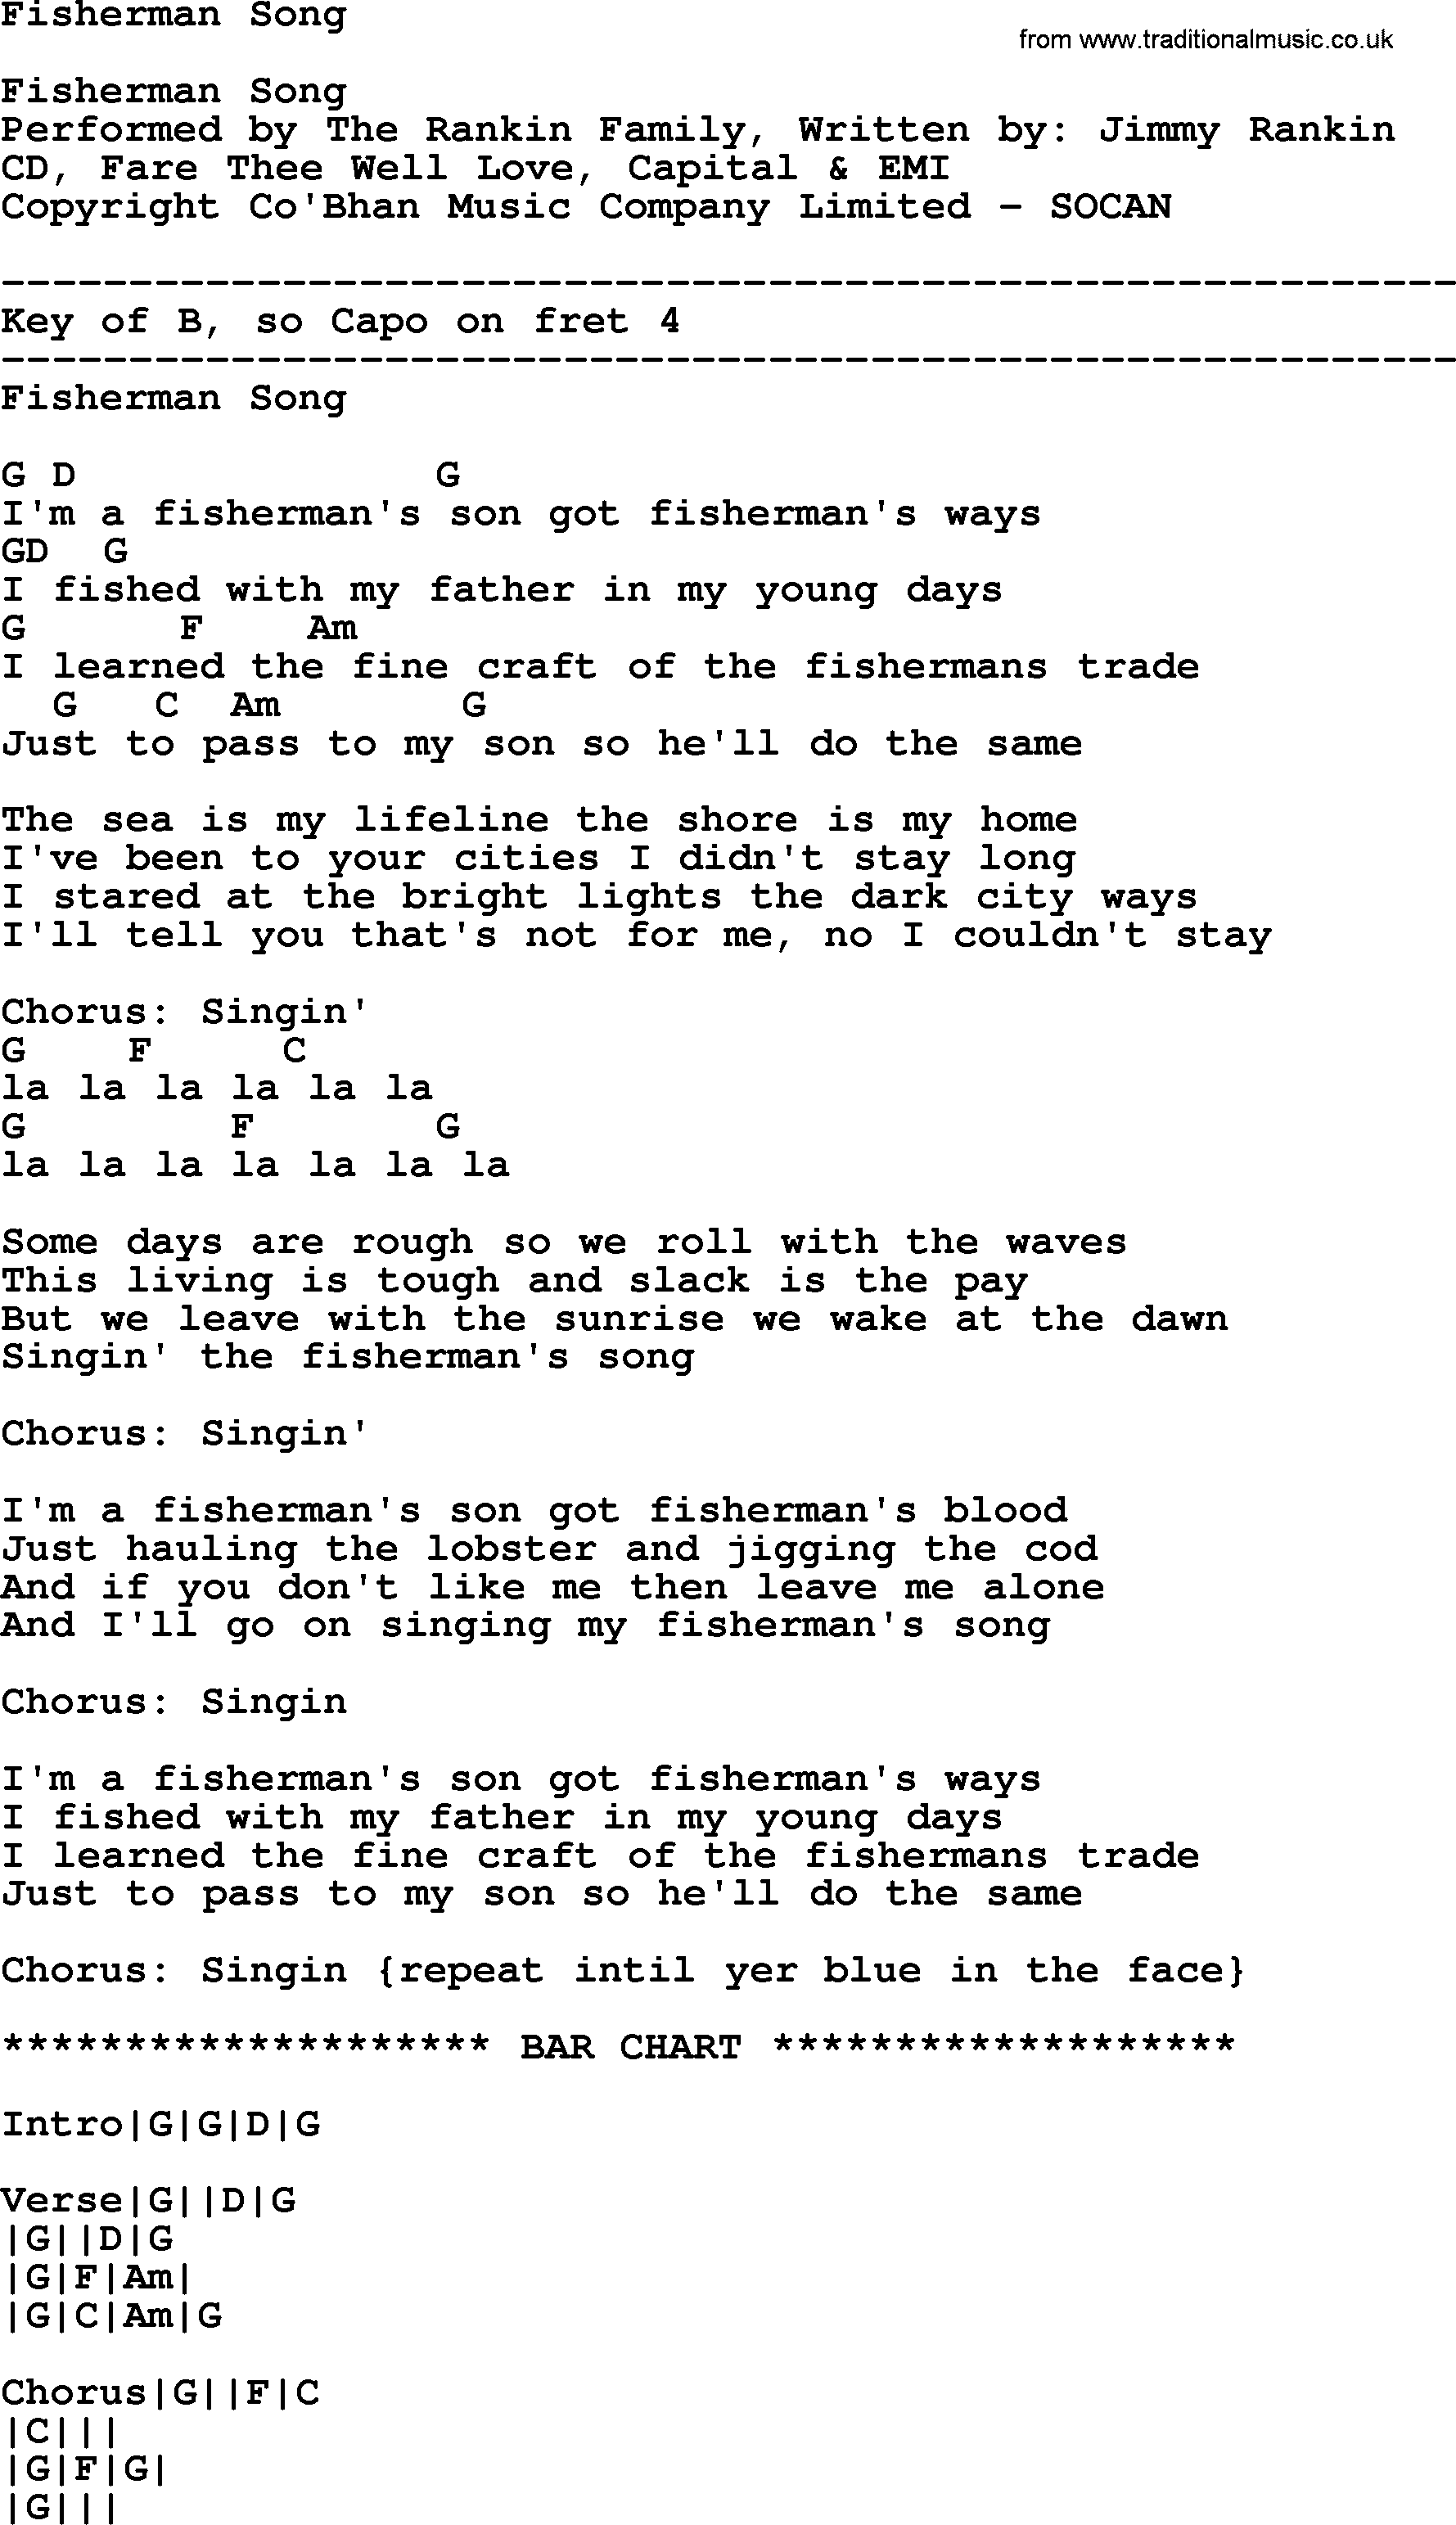 Fisherman Song - Bluegrass lyrics with chords